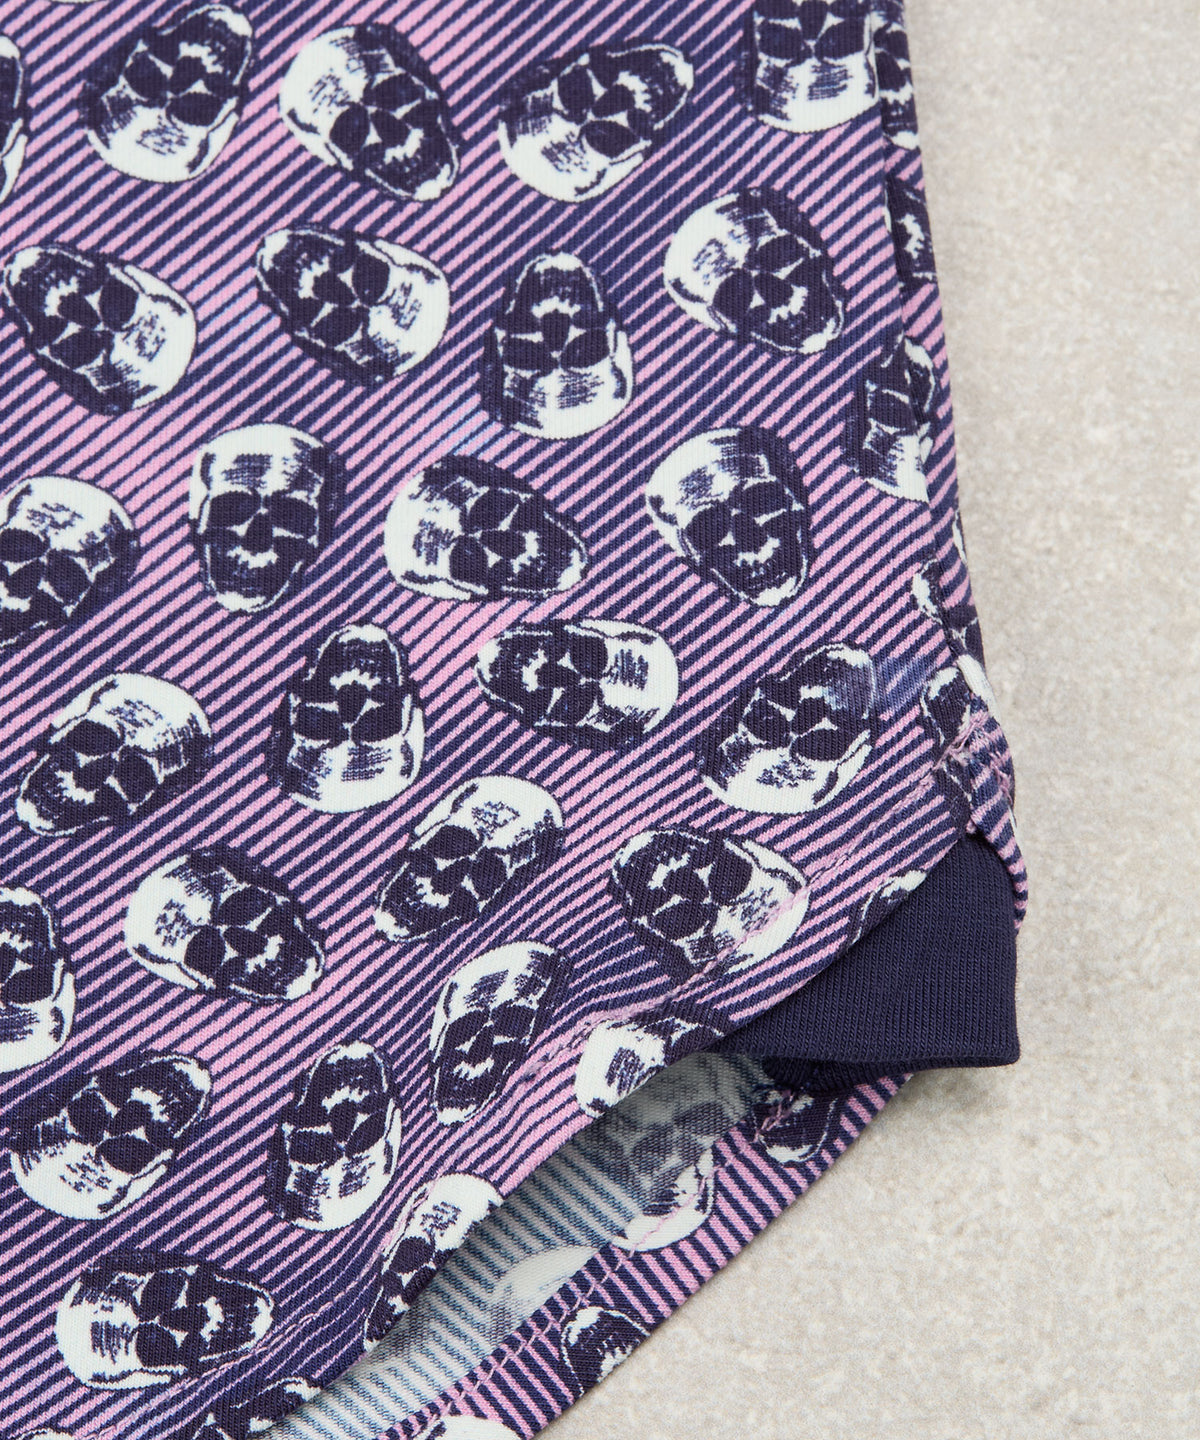 Westport Black Button Front Skull Print Knit Shirt, Big & Tall